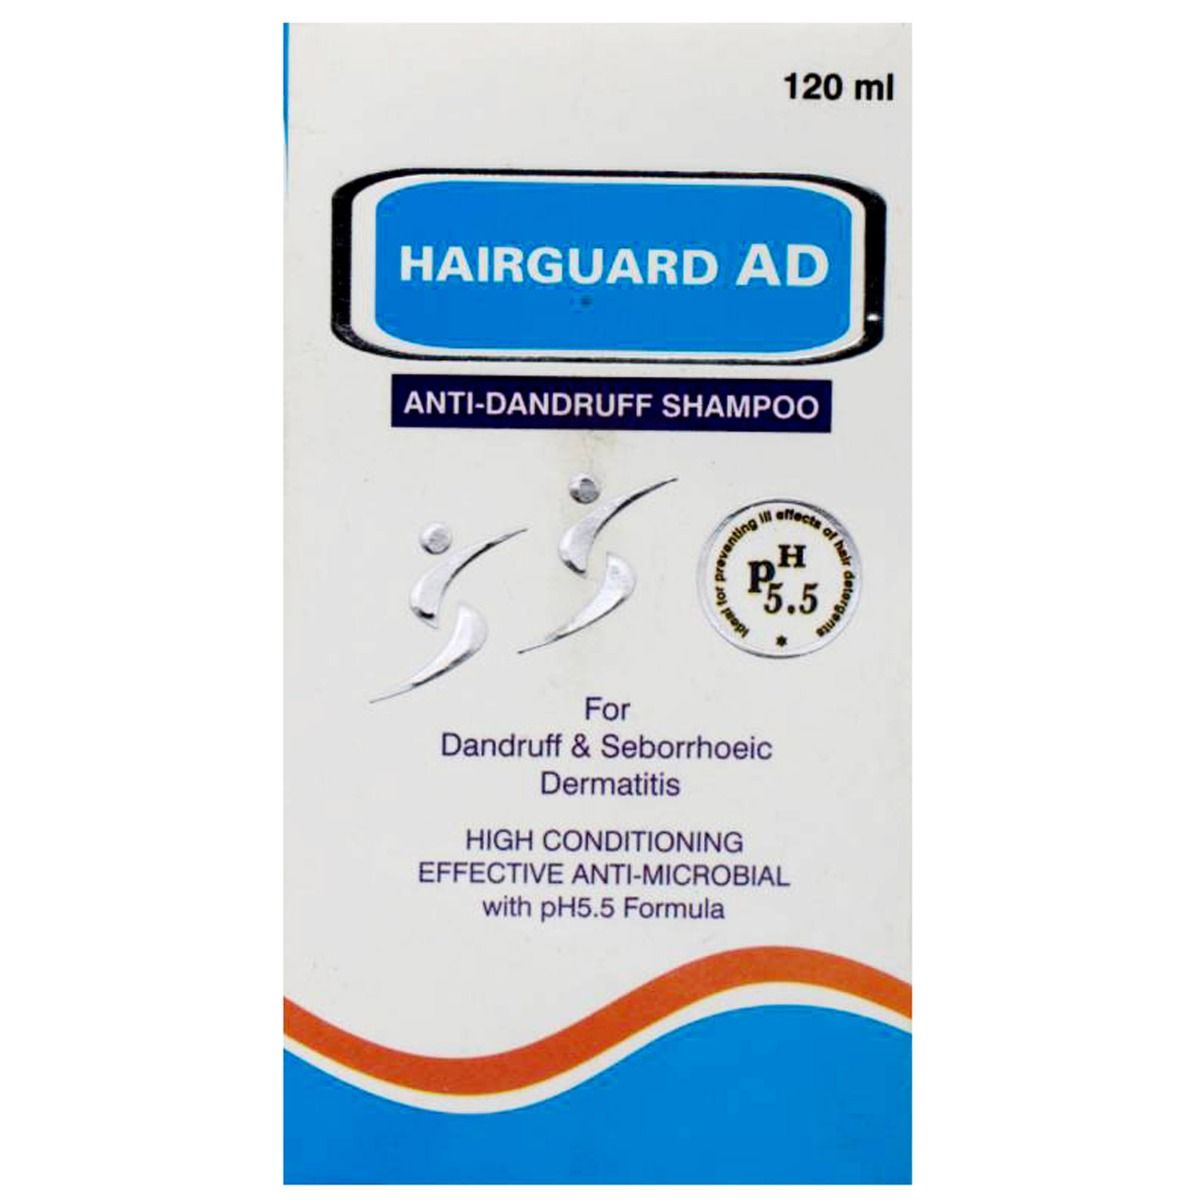 Hairguard AD Shampoo 120 ml, Pack of 1 